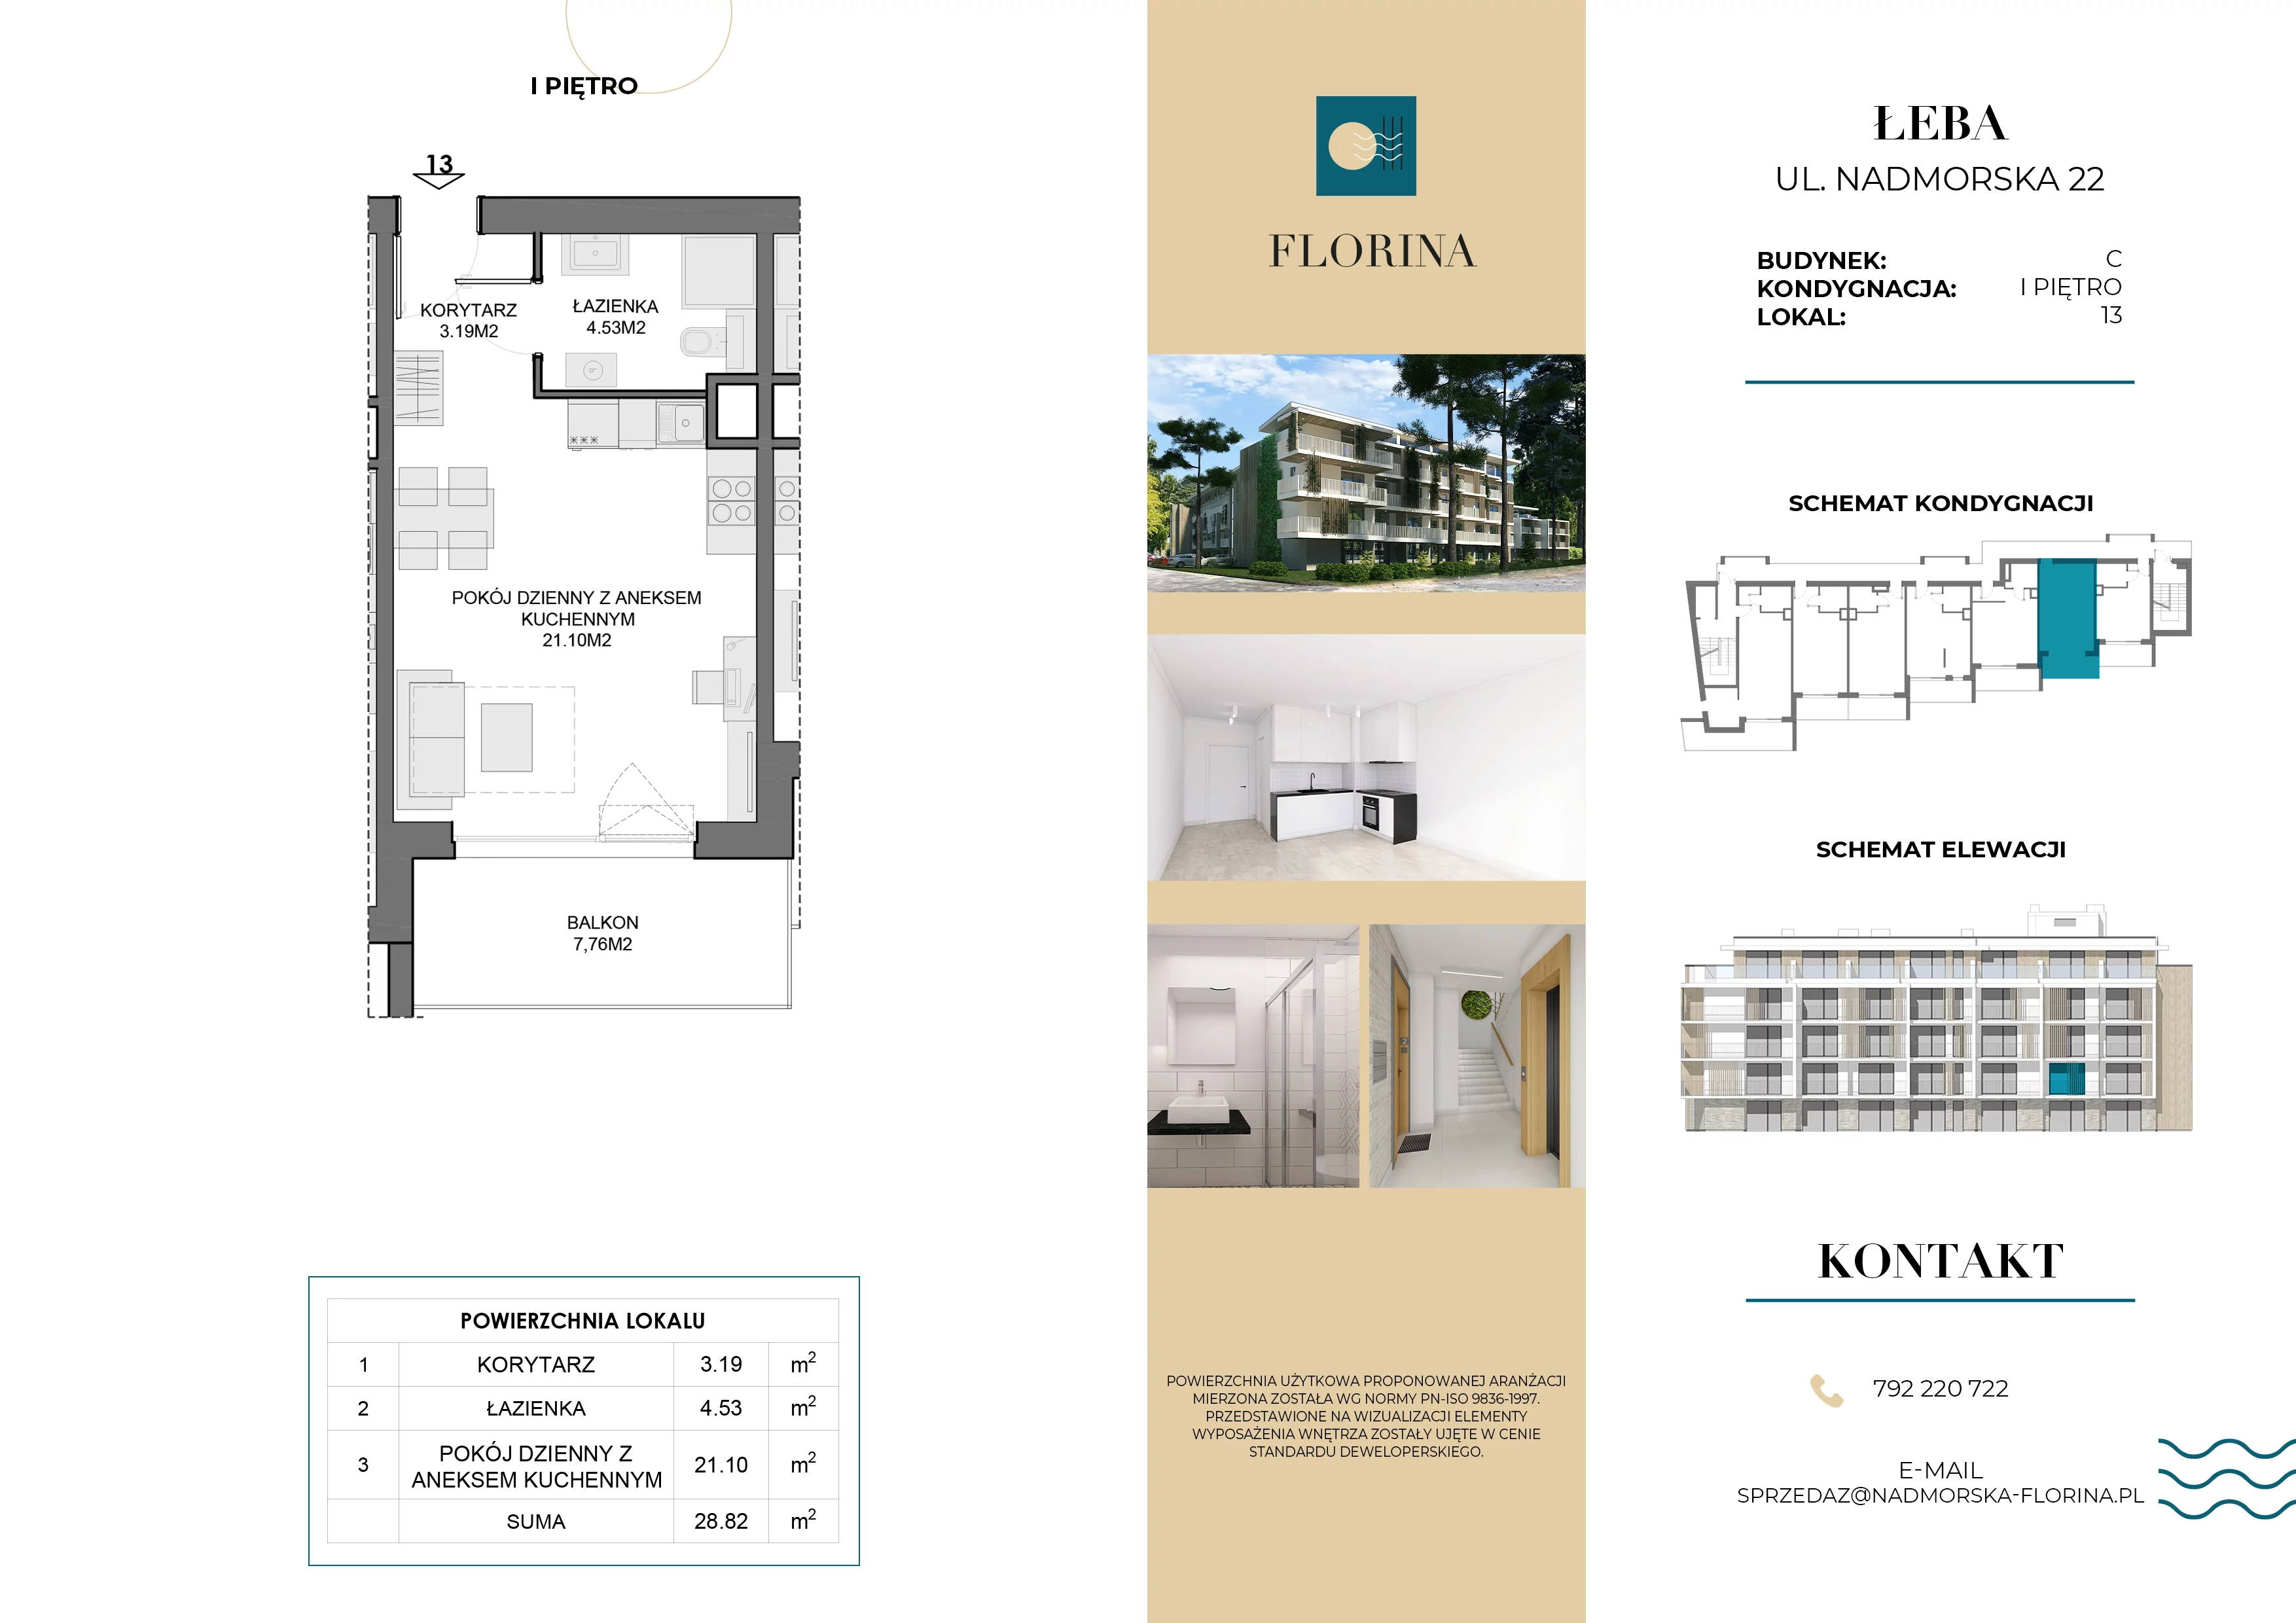 Apartament inwestycyjny 28,83 m², piętro 1, oferta nr C.M13, Nadmorska Florina, Łeba, ul. Nadmorska